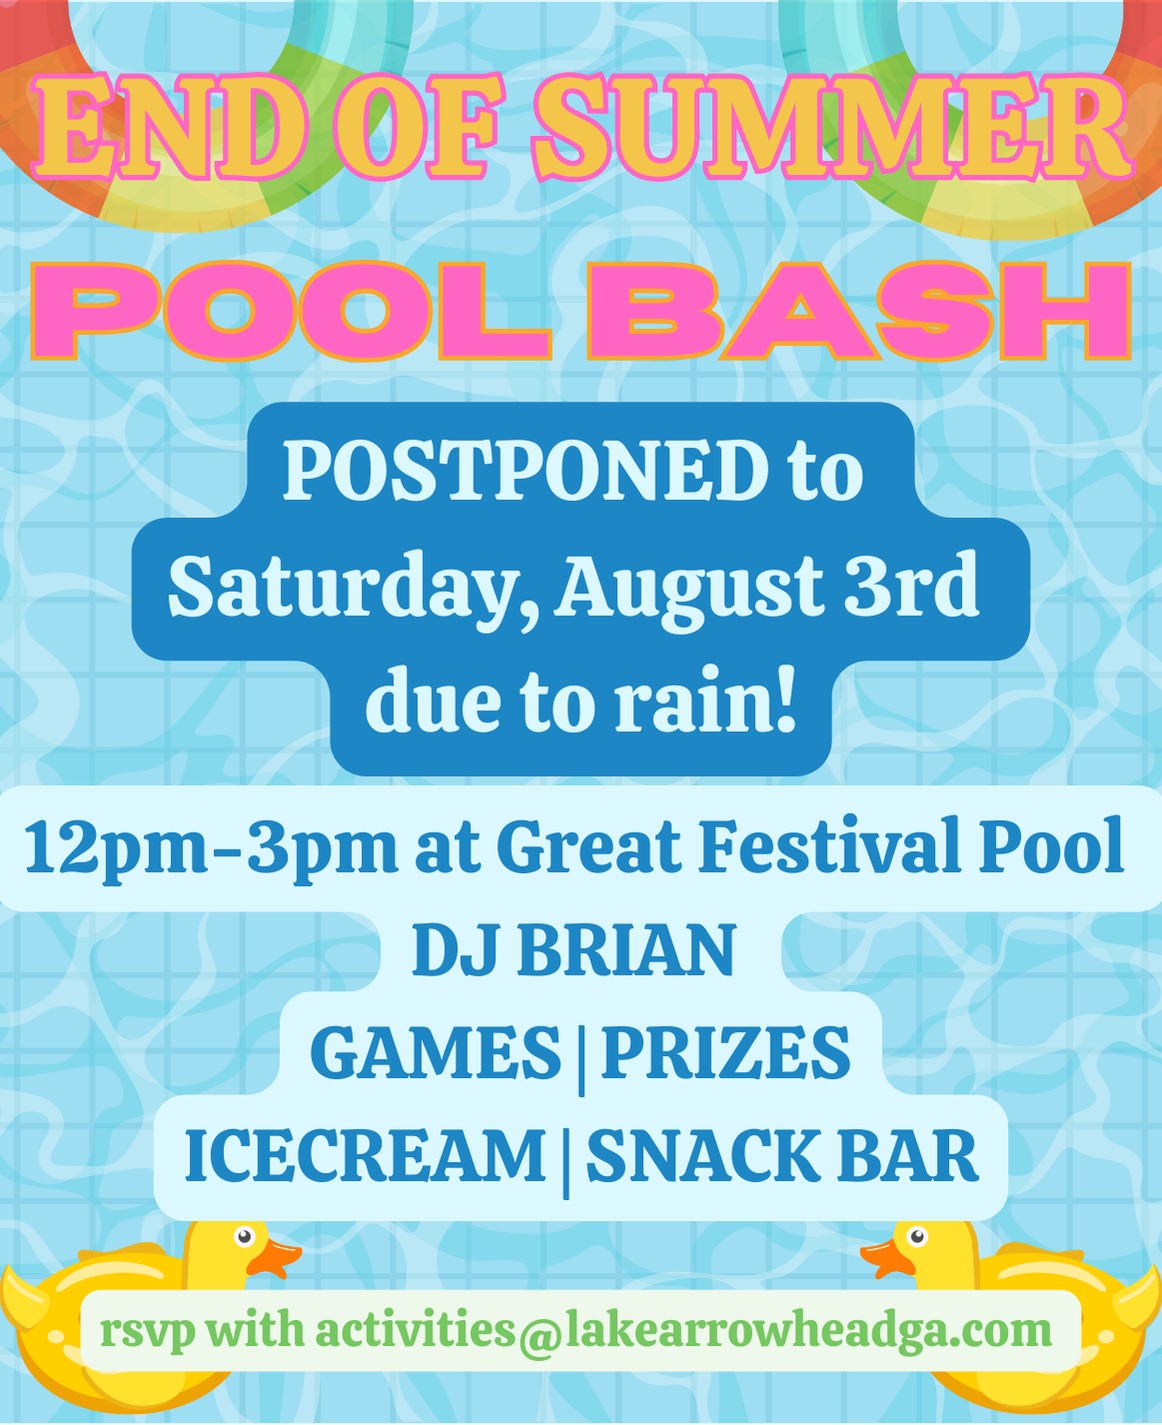 Pool Bash Postponed to Aug. 3